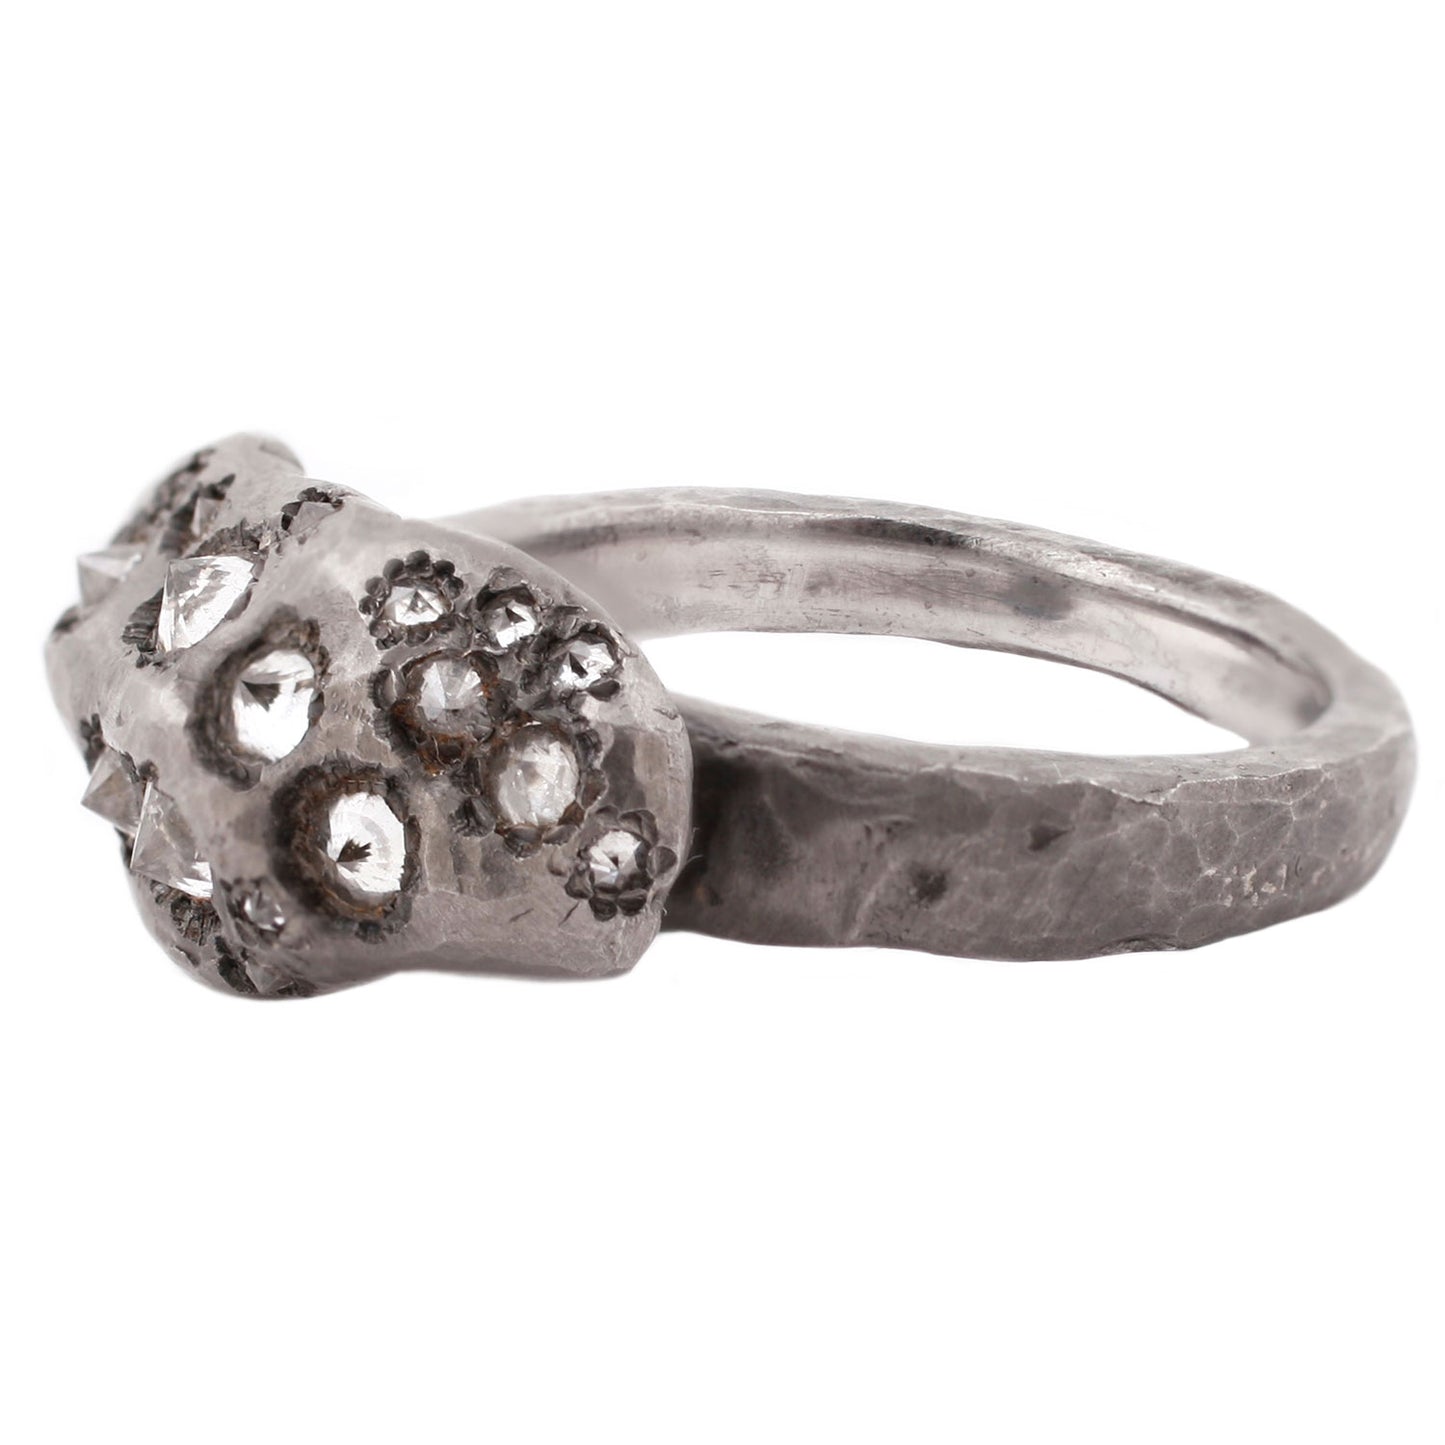 Amorphous Diamond Ring